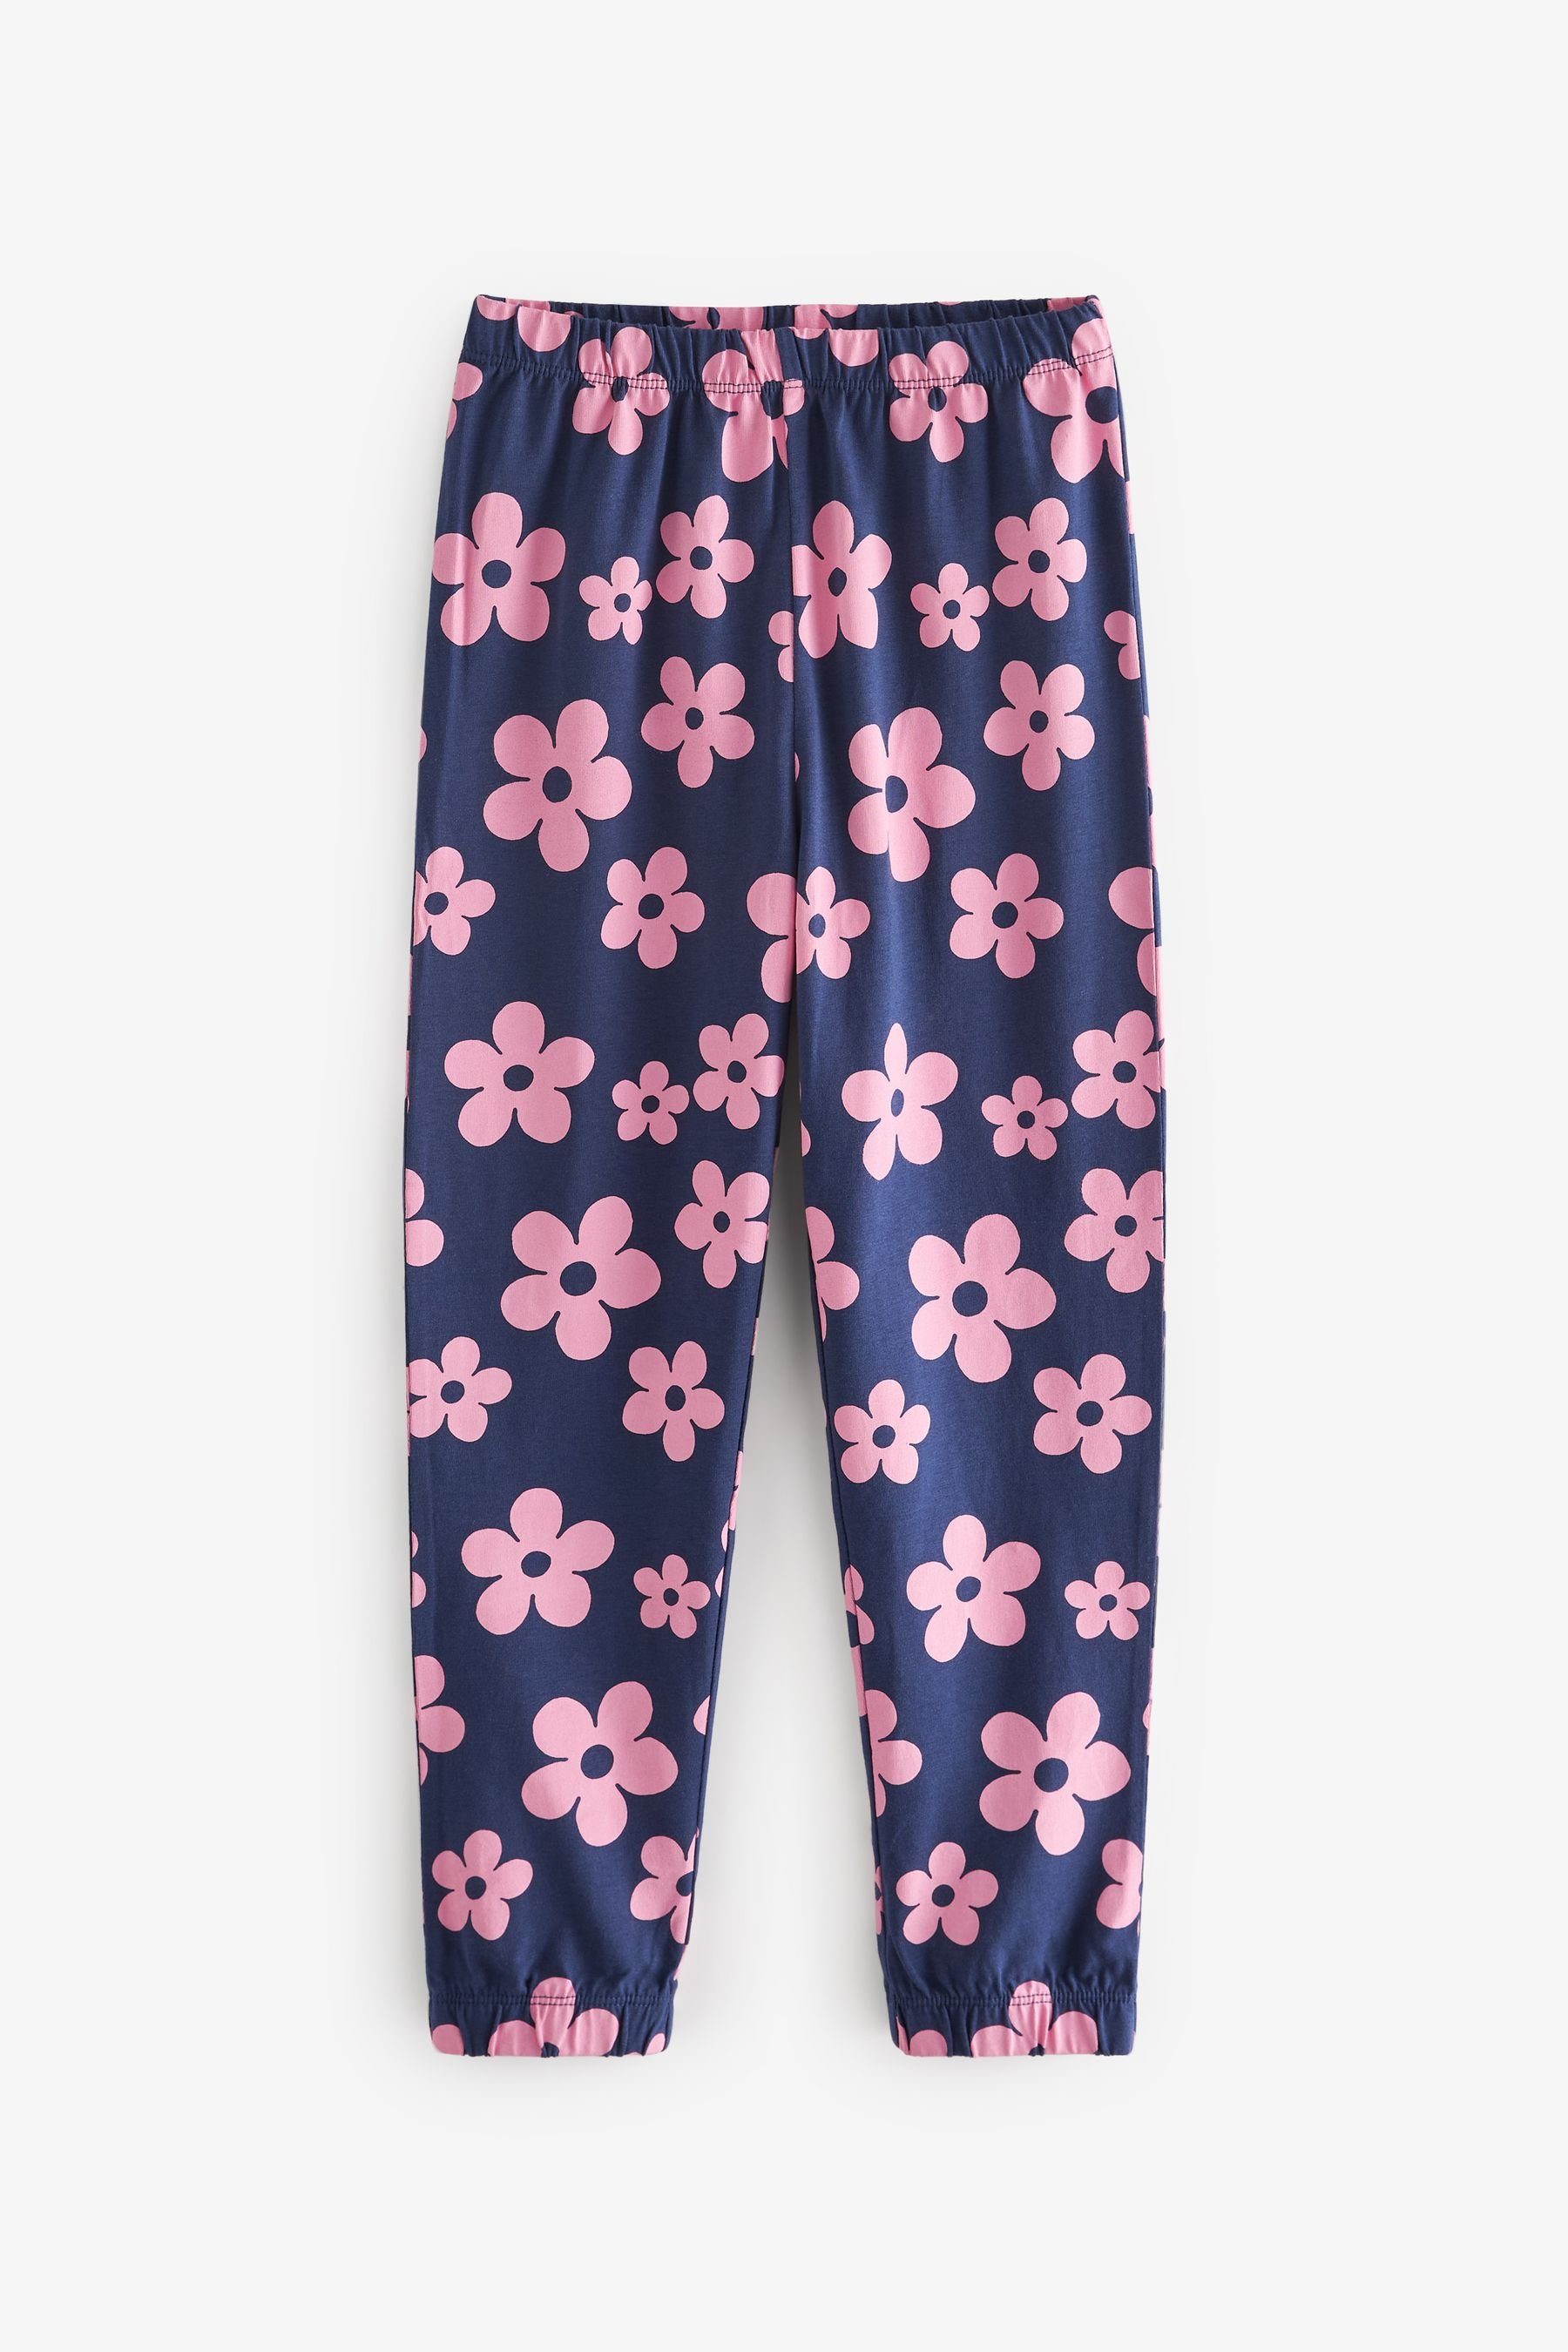 Next Pyjama 2er-Pack Navy/Pink Heart Schlafanzüge tlg) Daisy (4